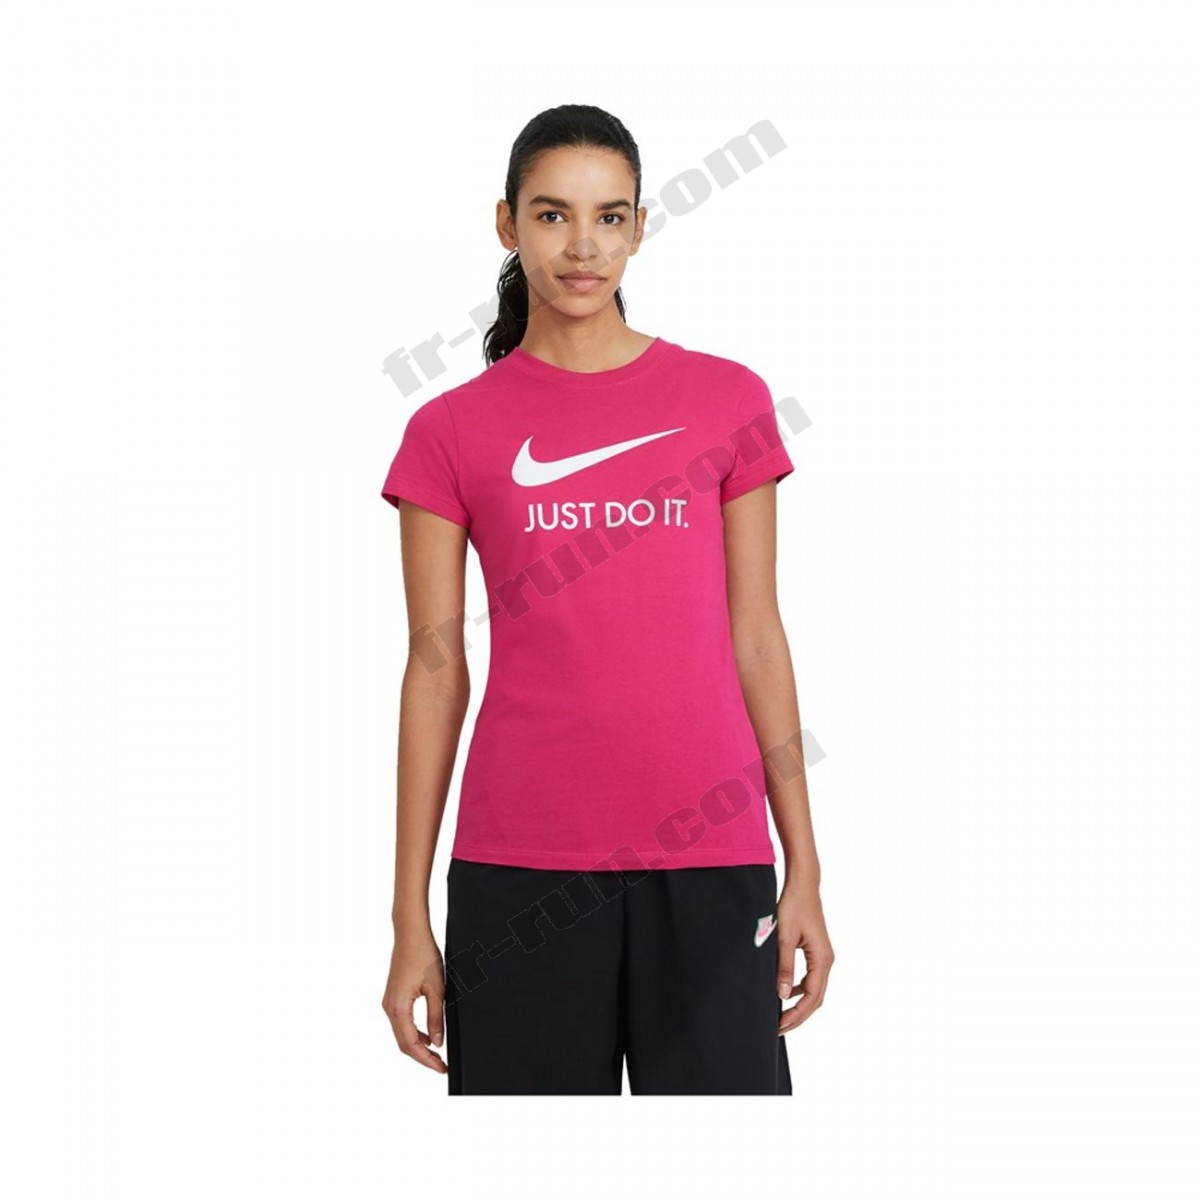 Nike/running femme NIKE Nike Wmns Jdi ◇◇◇ Pas Cher Du Tout - -3